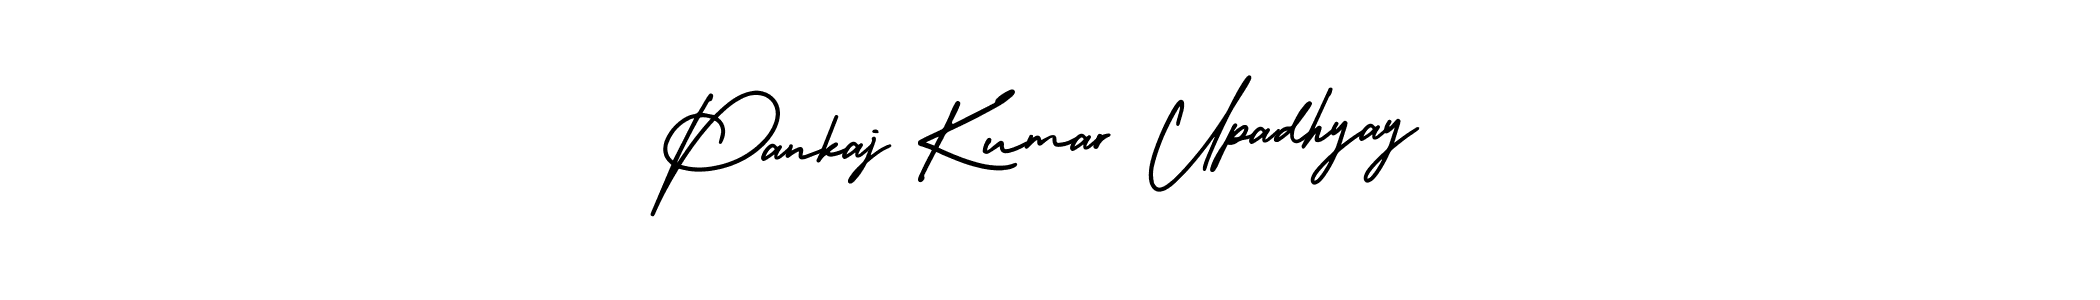 Best and Professional Signature Style for Pankaj Kumar Upadhyay. AmerikaSignatureDemo-Regular Best Signature Style Collection. Pankaj Kumar Upadhyay signature style 3 images and pictures png